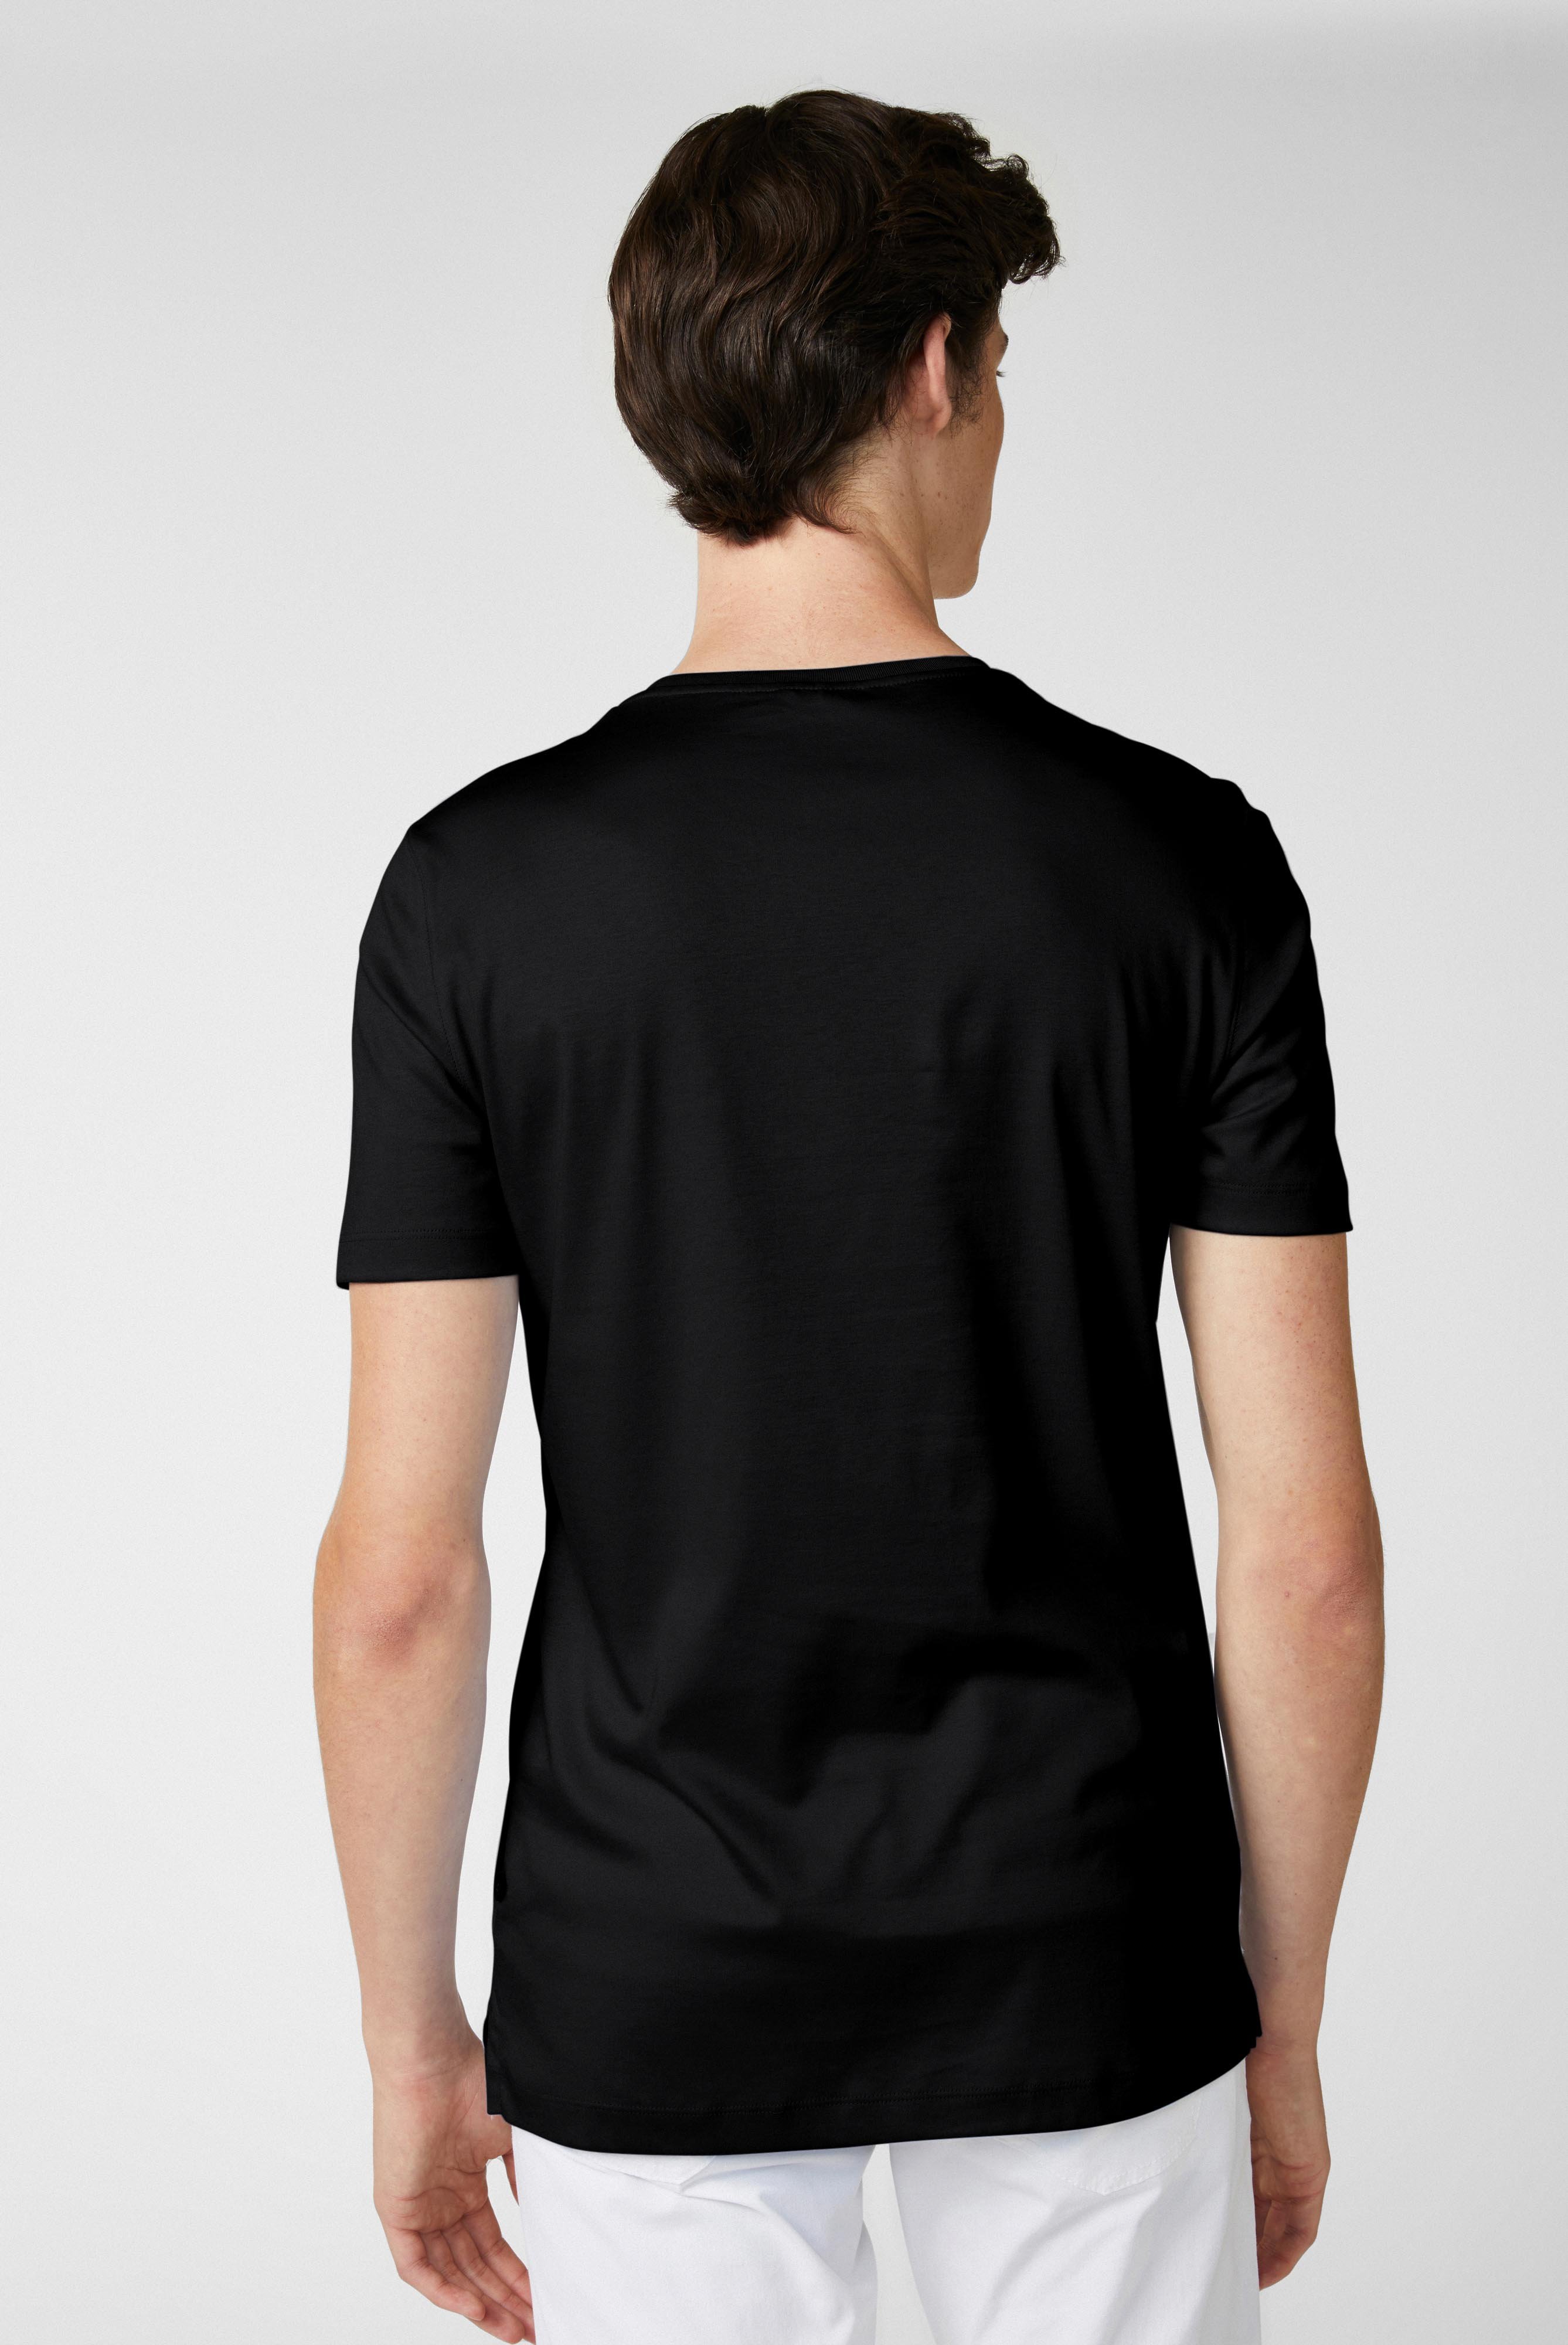 T-Shirts+Swiss Cotton Jersey Crew Neck T-Shirt+20.1717.UX.180031.099.XL